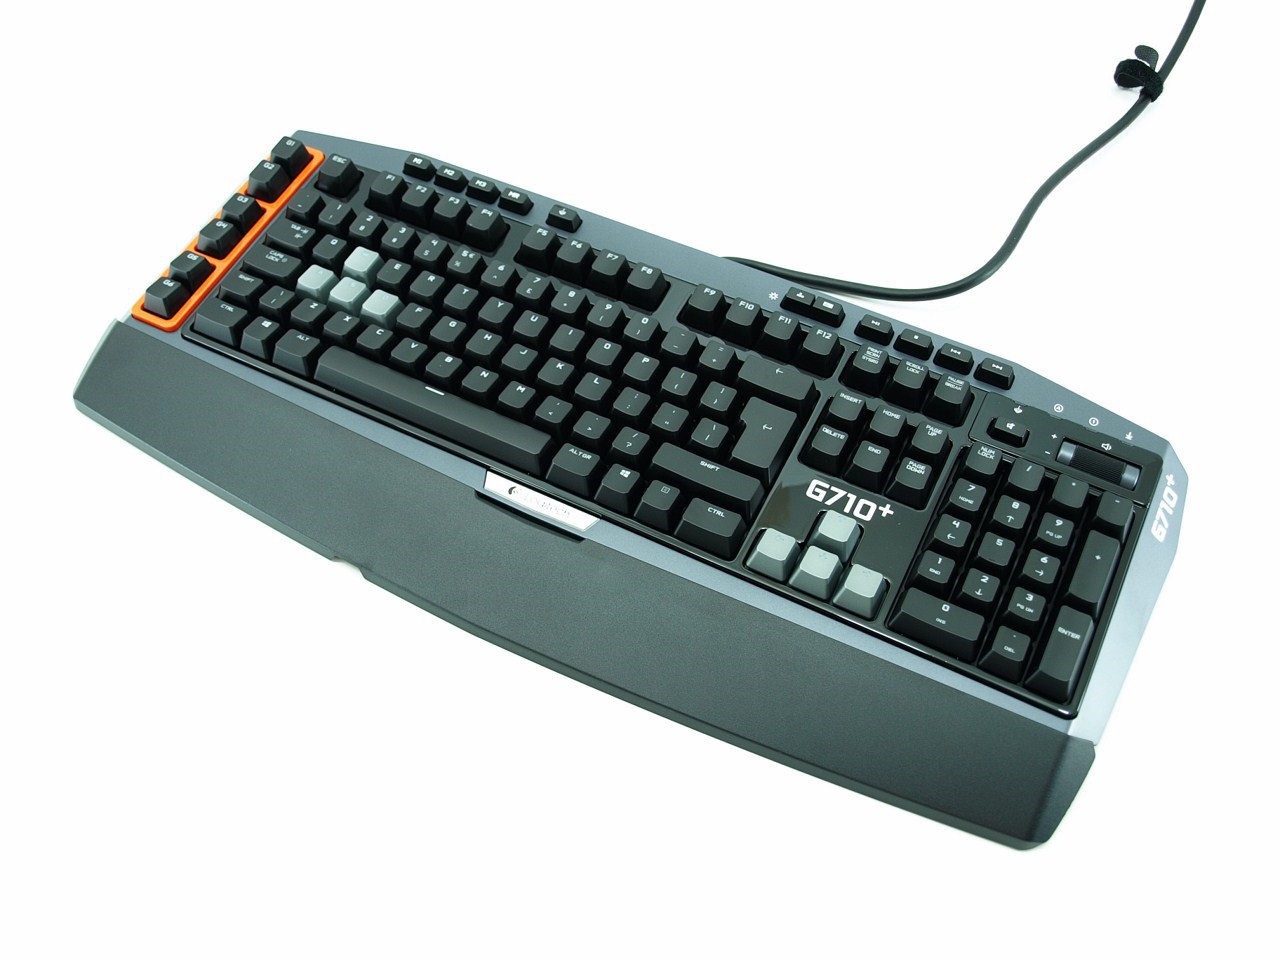 G710+ Gaming Keyboard Review